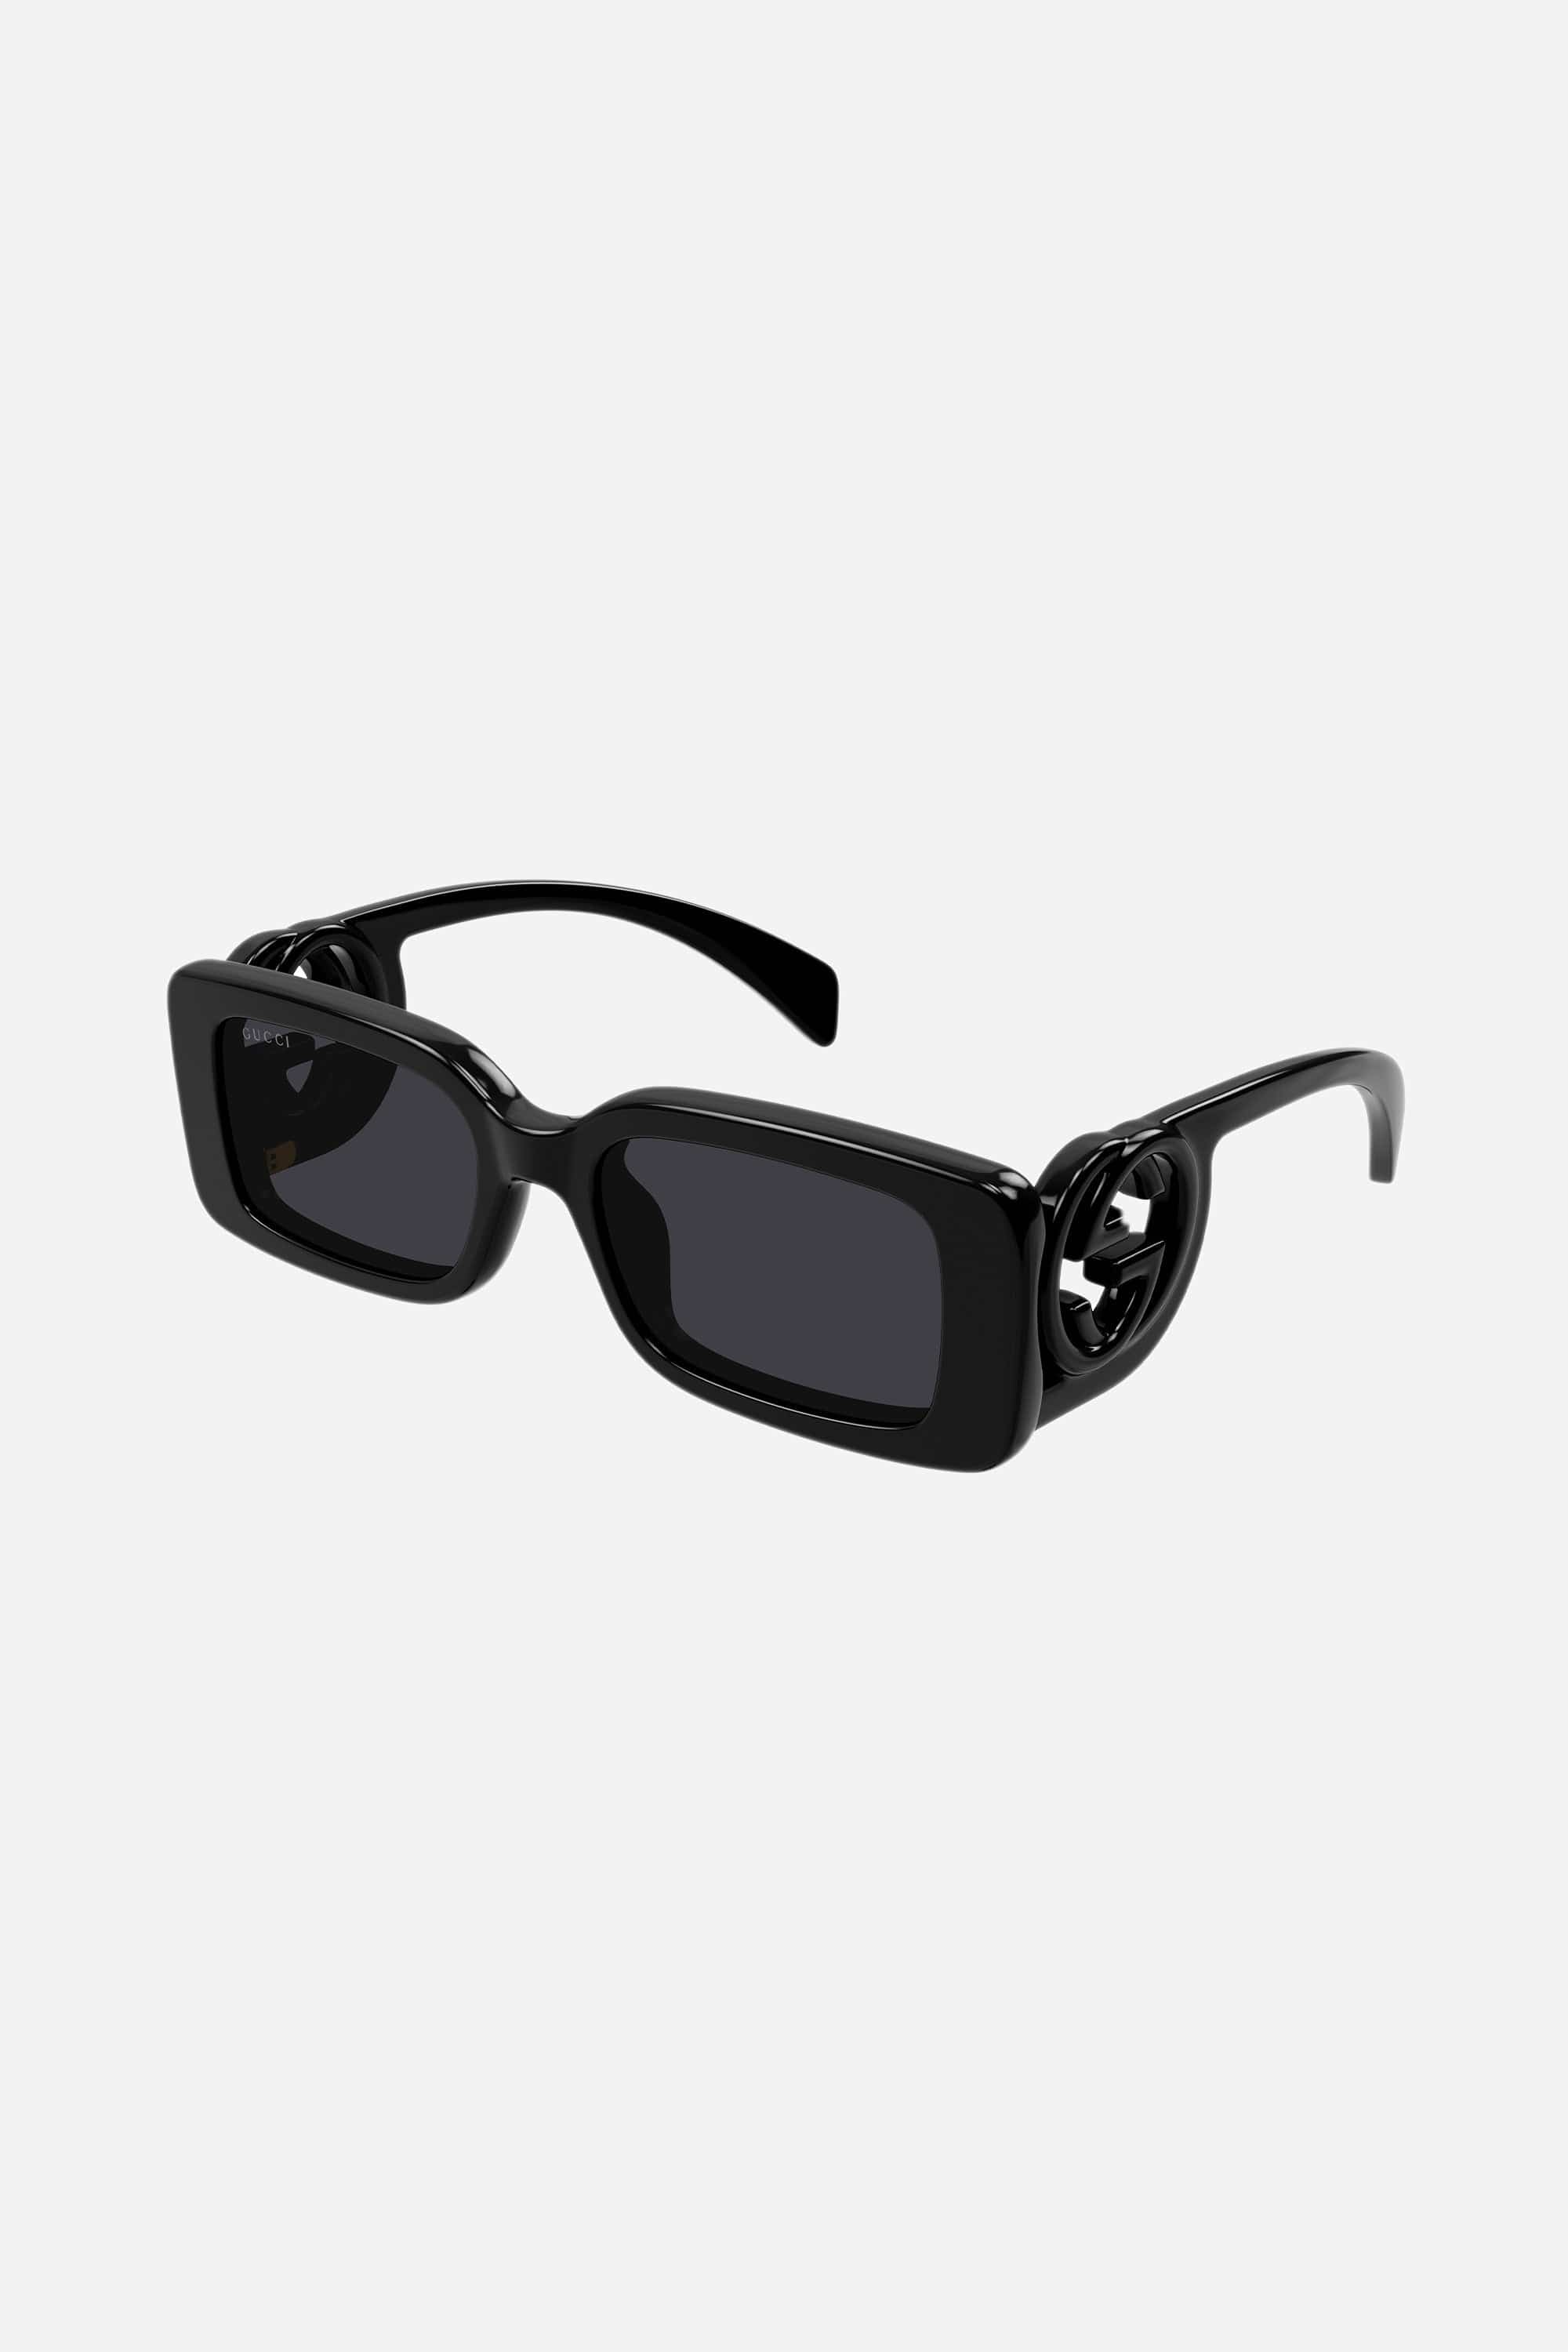 Gucci black bold rectangular sunglasses GG1325S- Eyewear Club